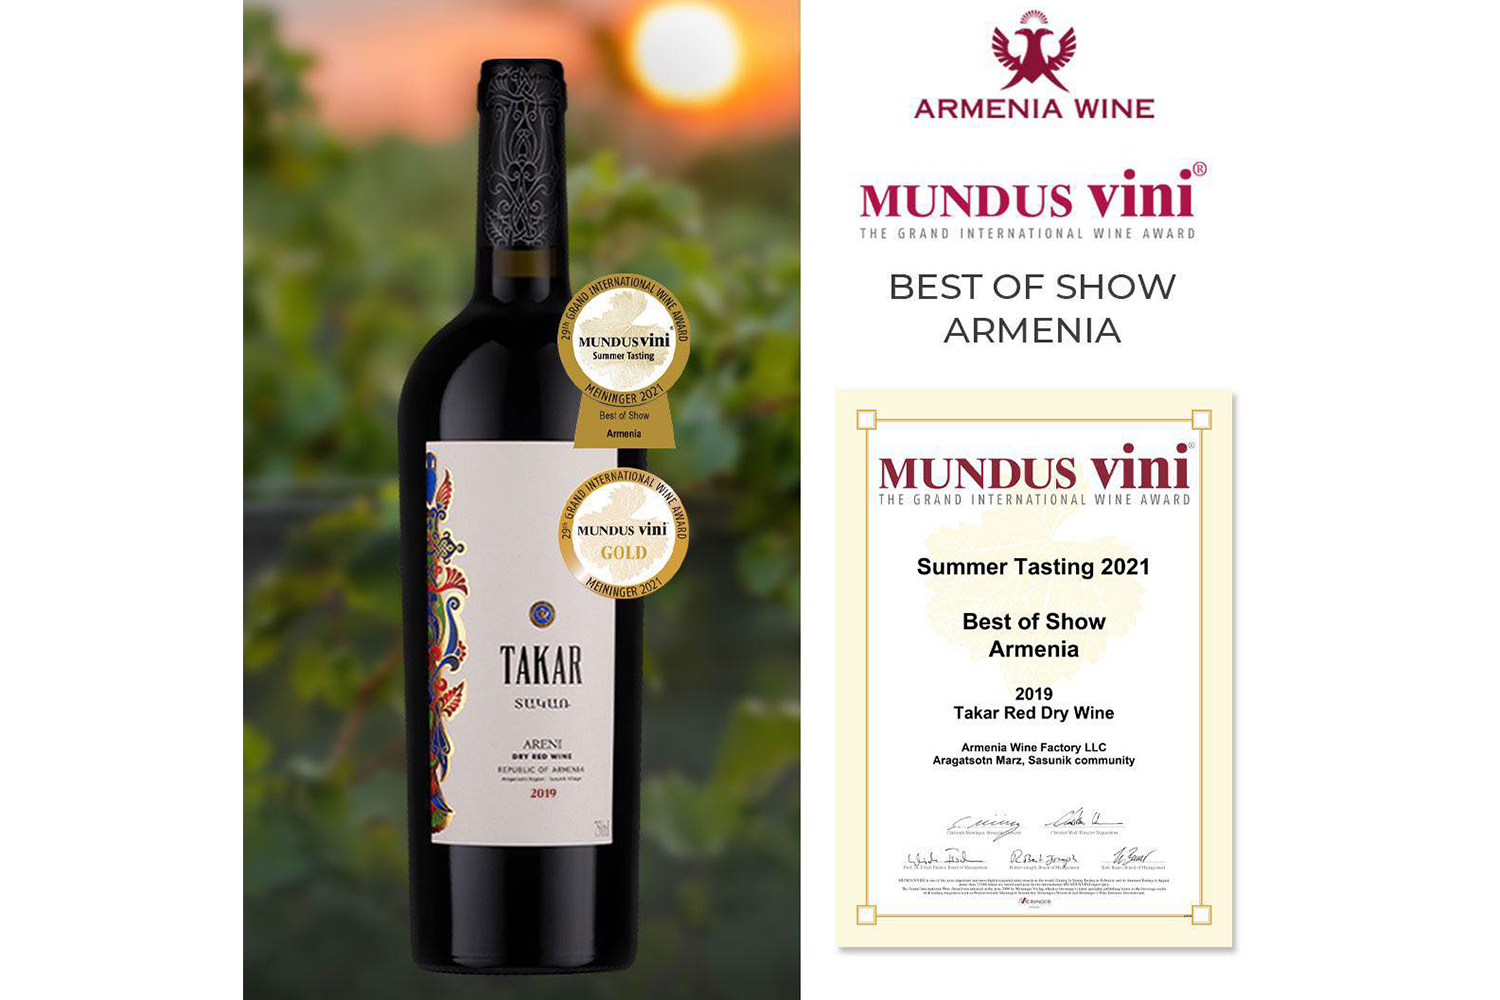 Armenia Wine привезла 8 медалей с конкурса MUNDUS VINI 2021